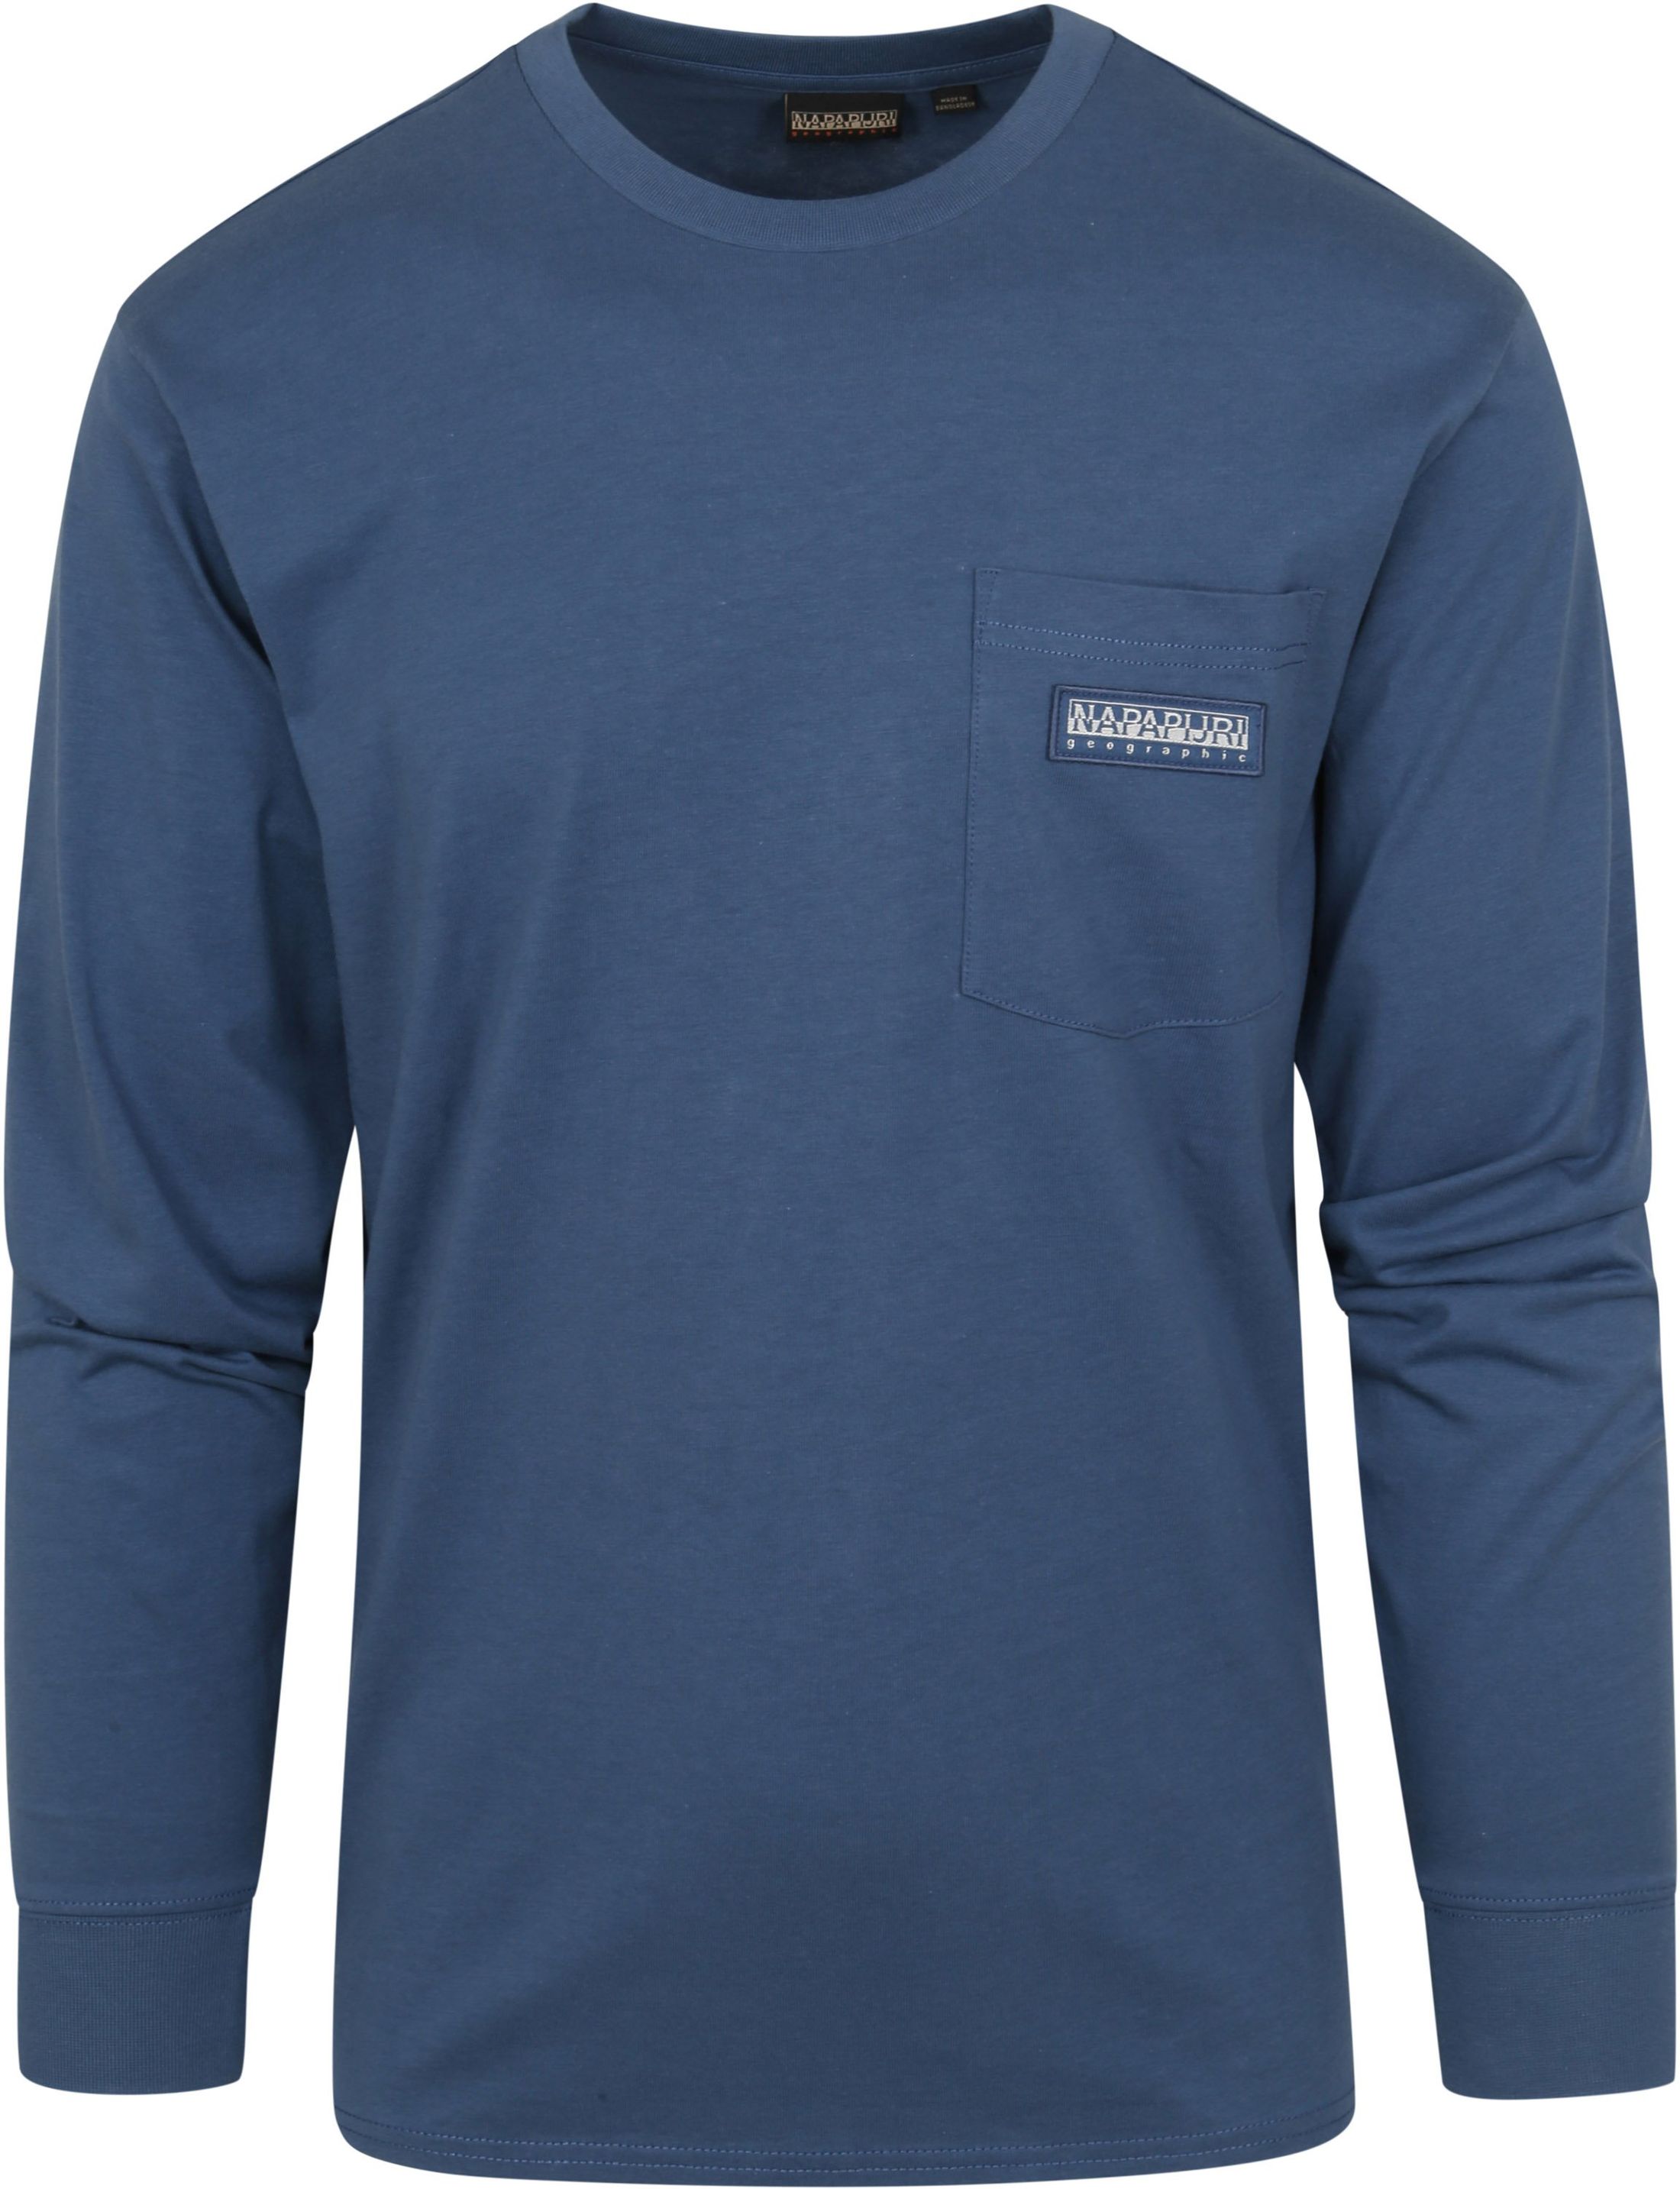 Napapijri S-Morgex Longsleeve T Shirt Blue Dark Blue size L